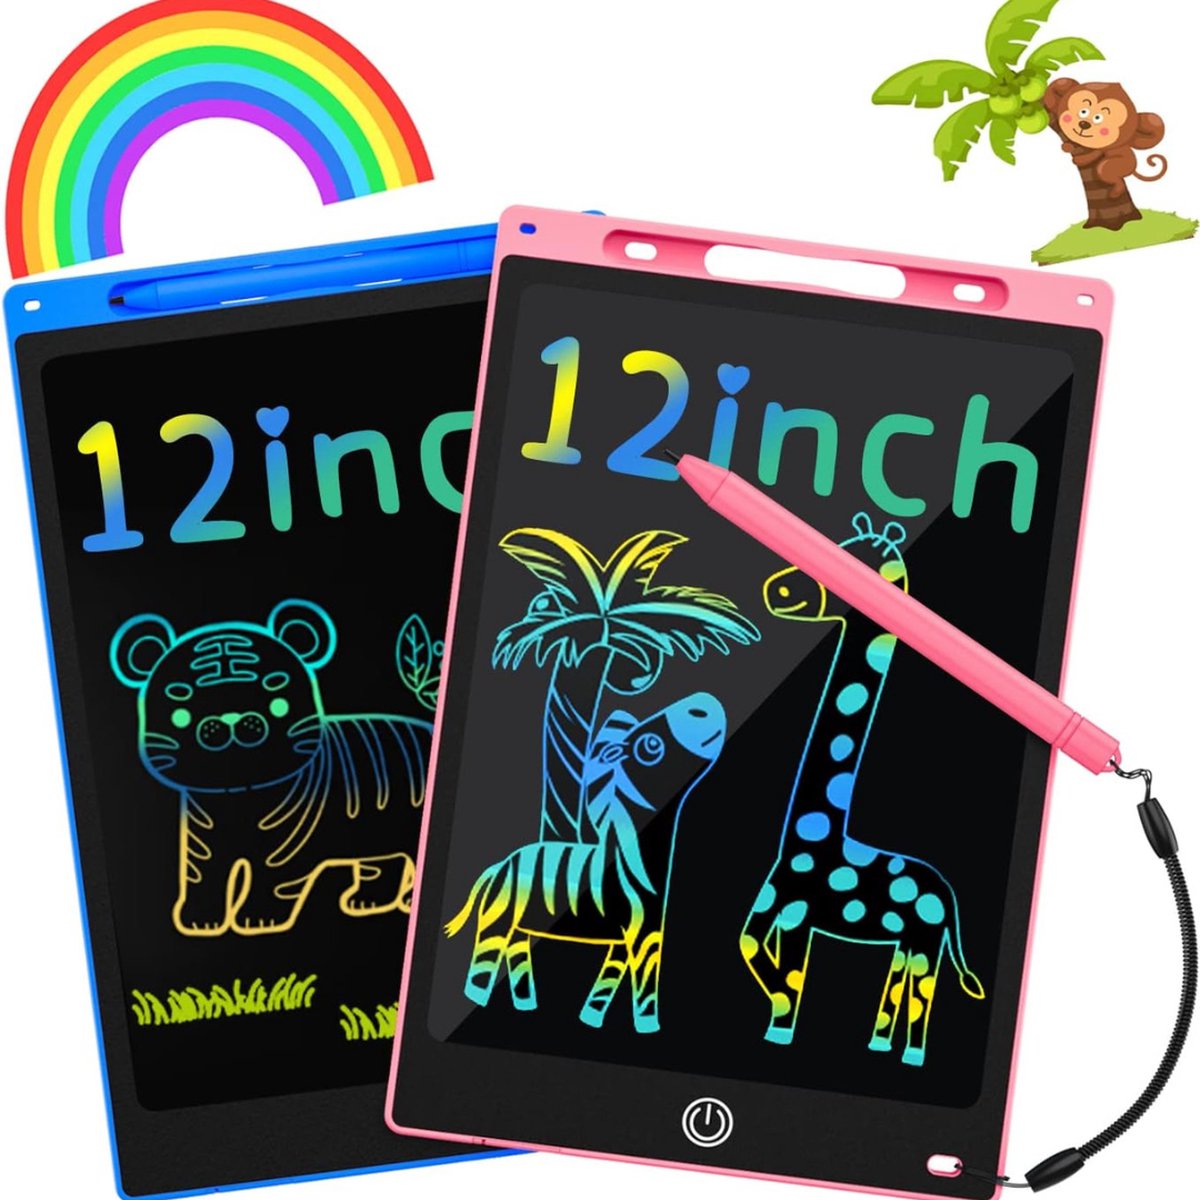 Kleyn - Tekentablet - LCD Teken Tablet - 12 Inch - Tekentablet Kinderen - Draagbaar en Digitaal - Blauw/Roze - 2 Stuks